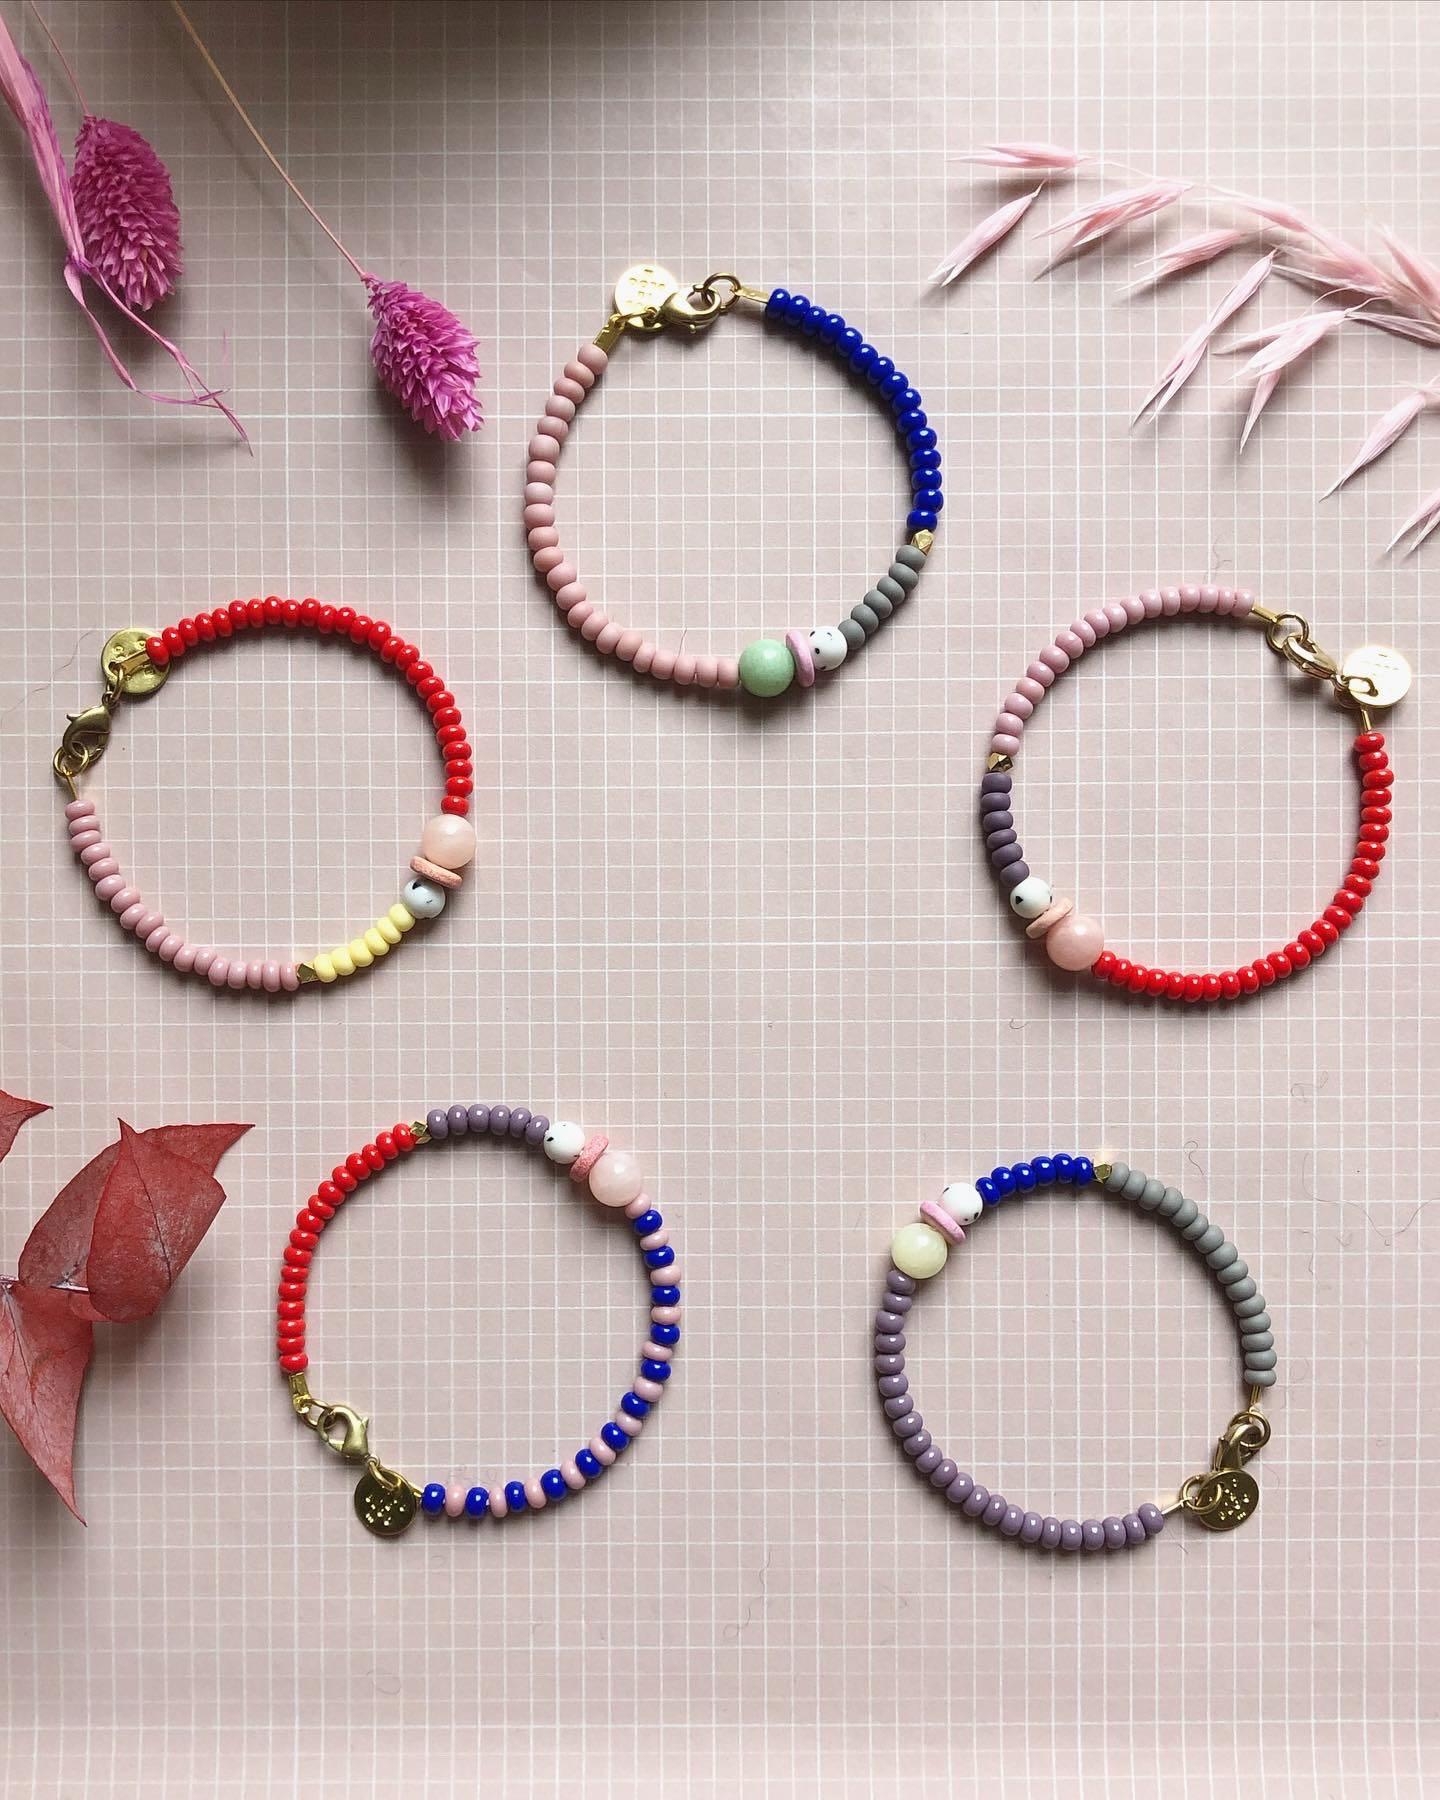 #friendshipbracelets #colorful #thankful #love #handmade #jewelry @Studiobloom_design